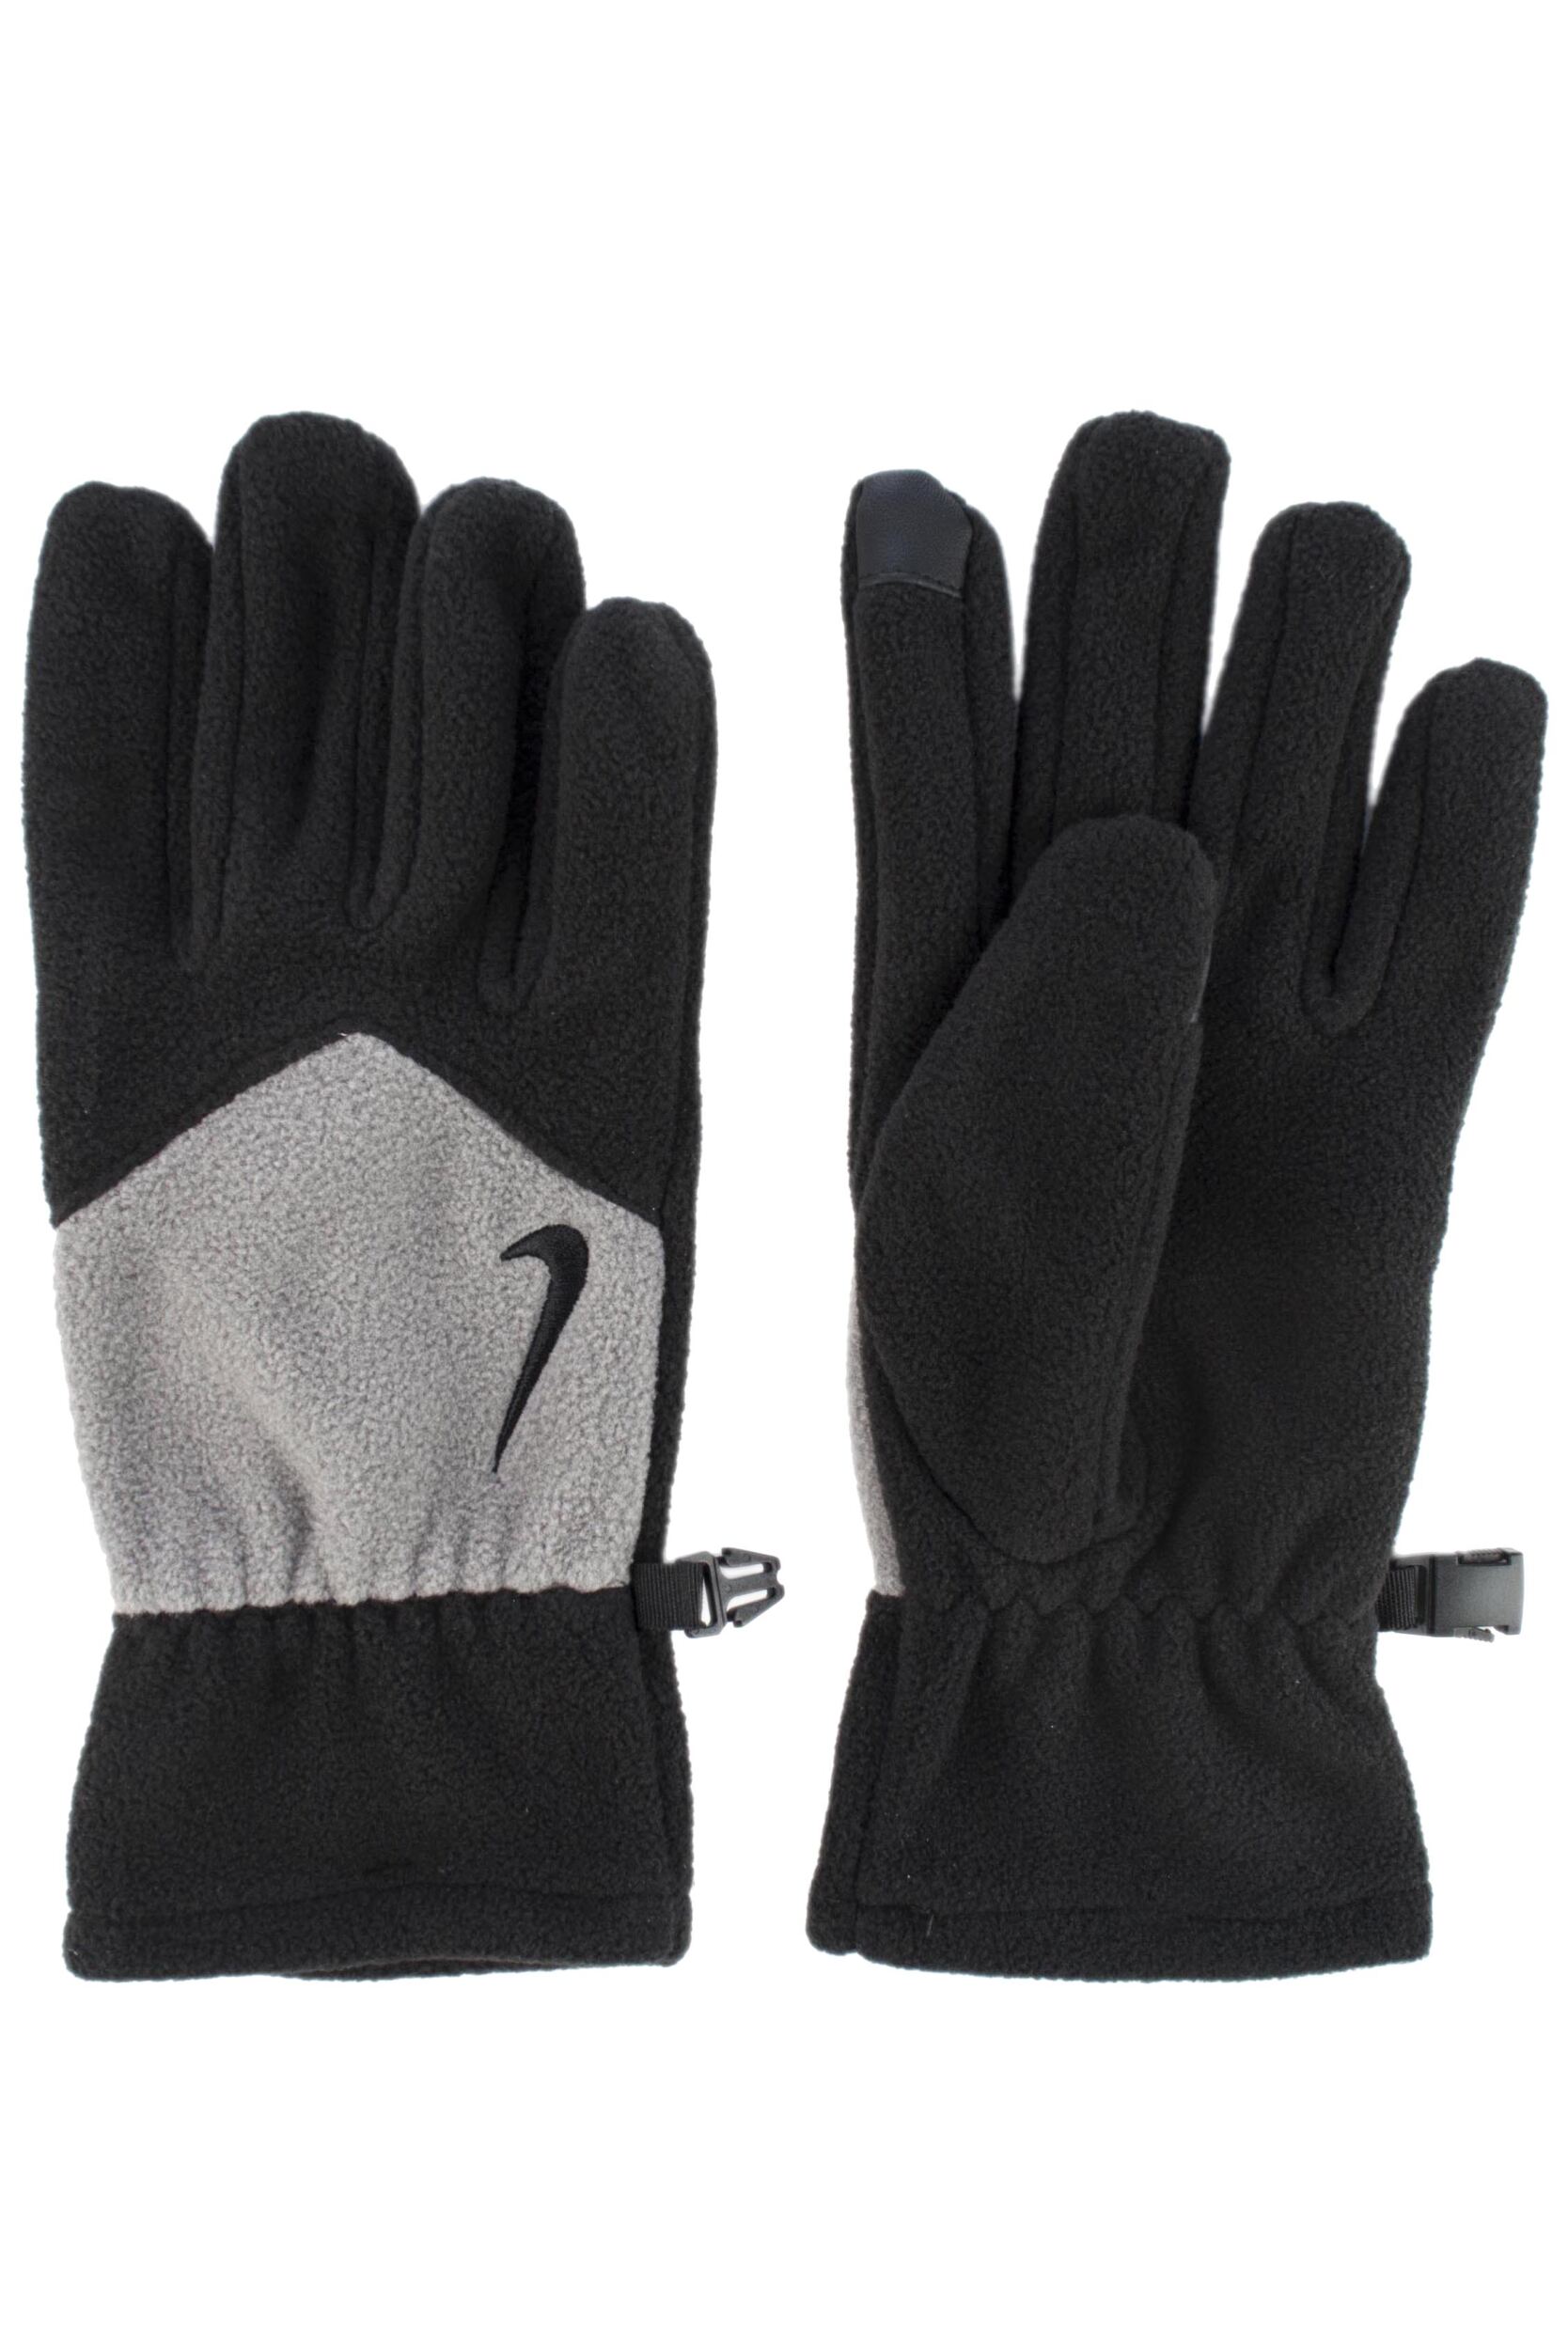 Mens 1 Pair Nike Sports Fleece Cold Weather Training Tech Gloves | eBay